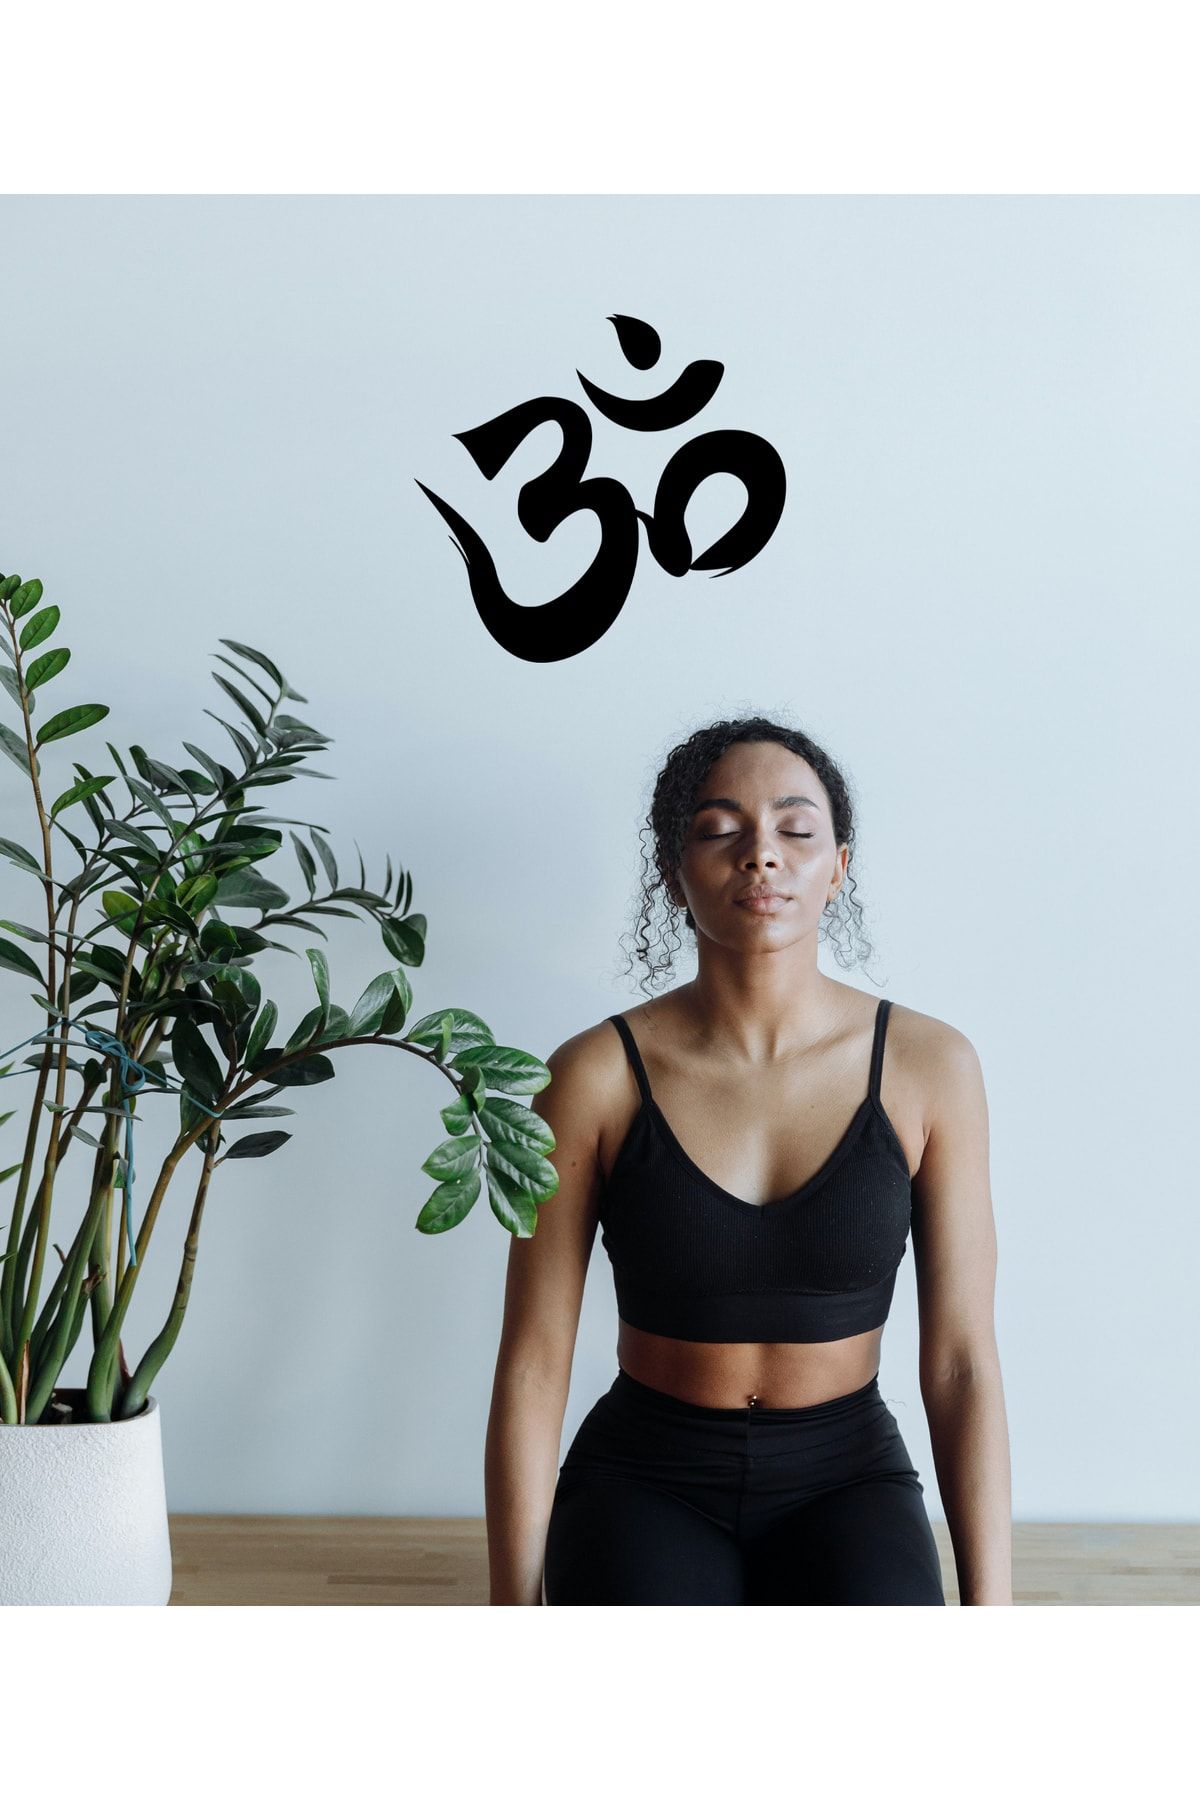 New Jargon Om Yoga Sembolü Duvar Sticker - Siyah 60x56cm